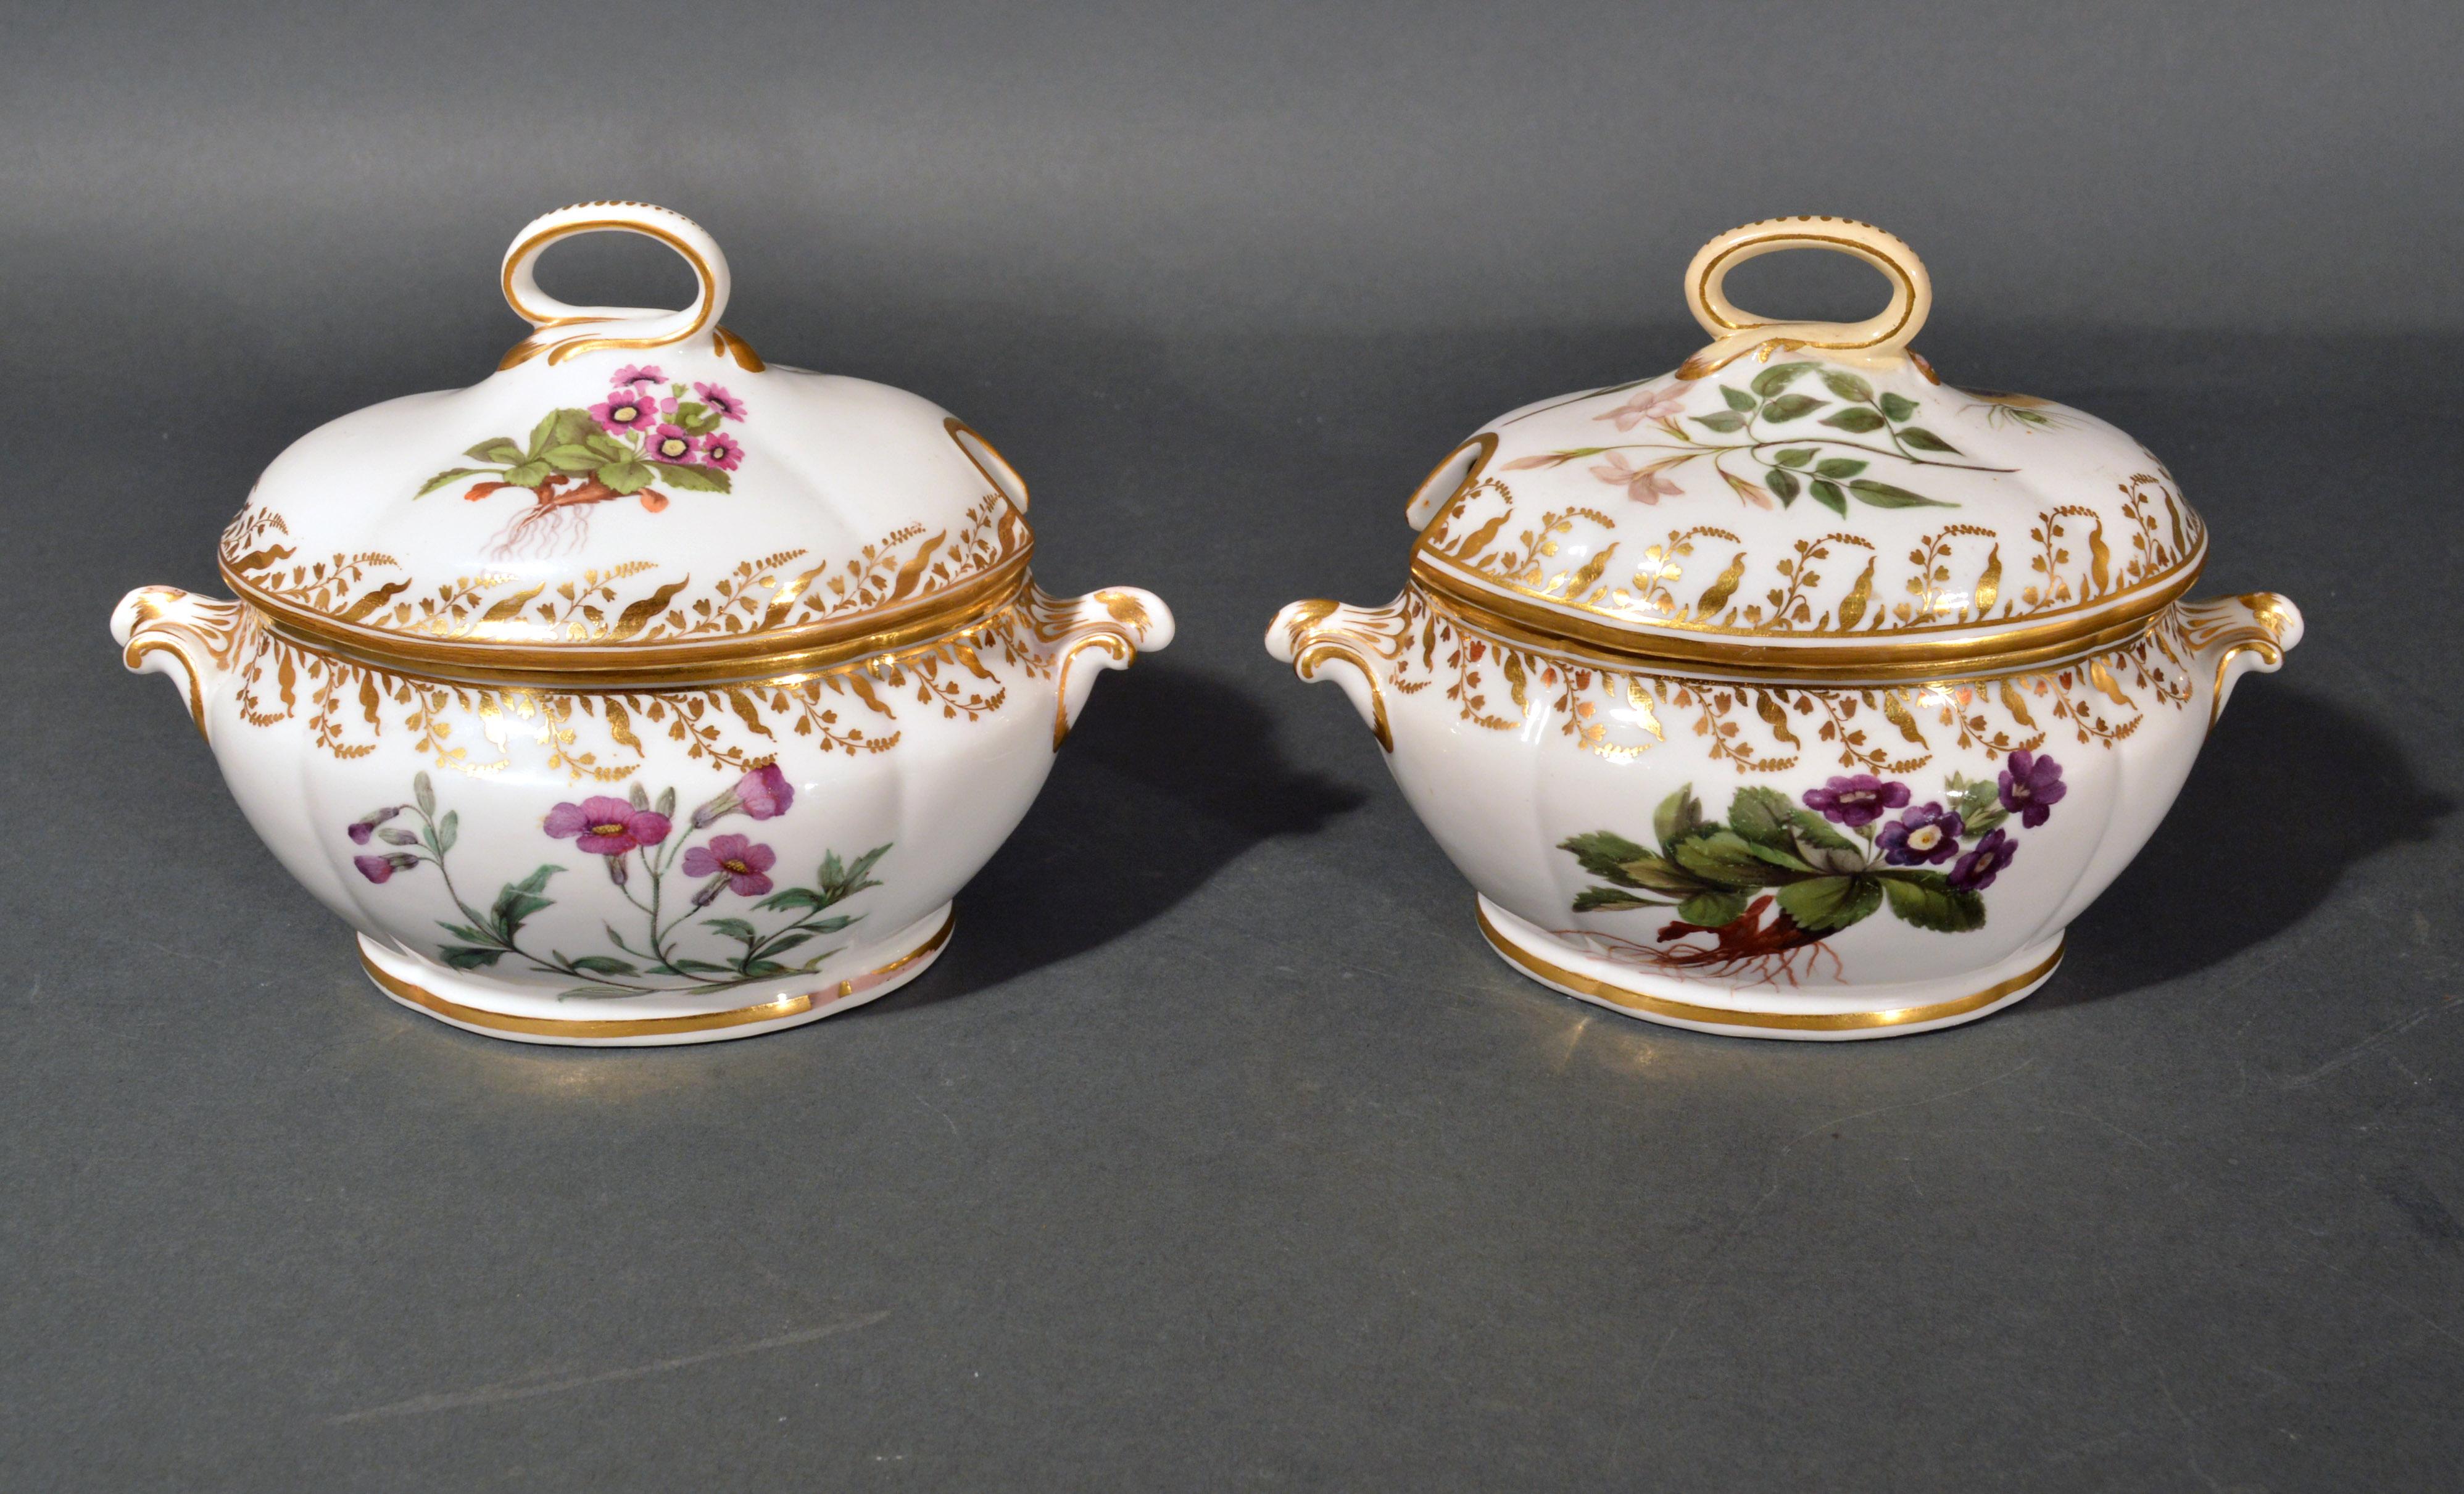 18th Century Derby Porcelain Botanical Dessert Service Including Pair of Fruit Coolers